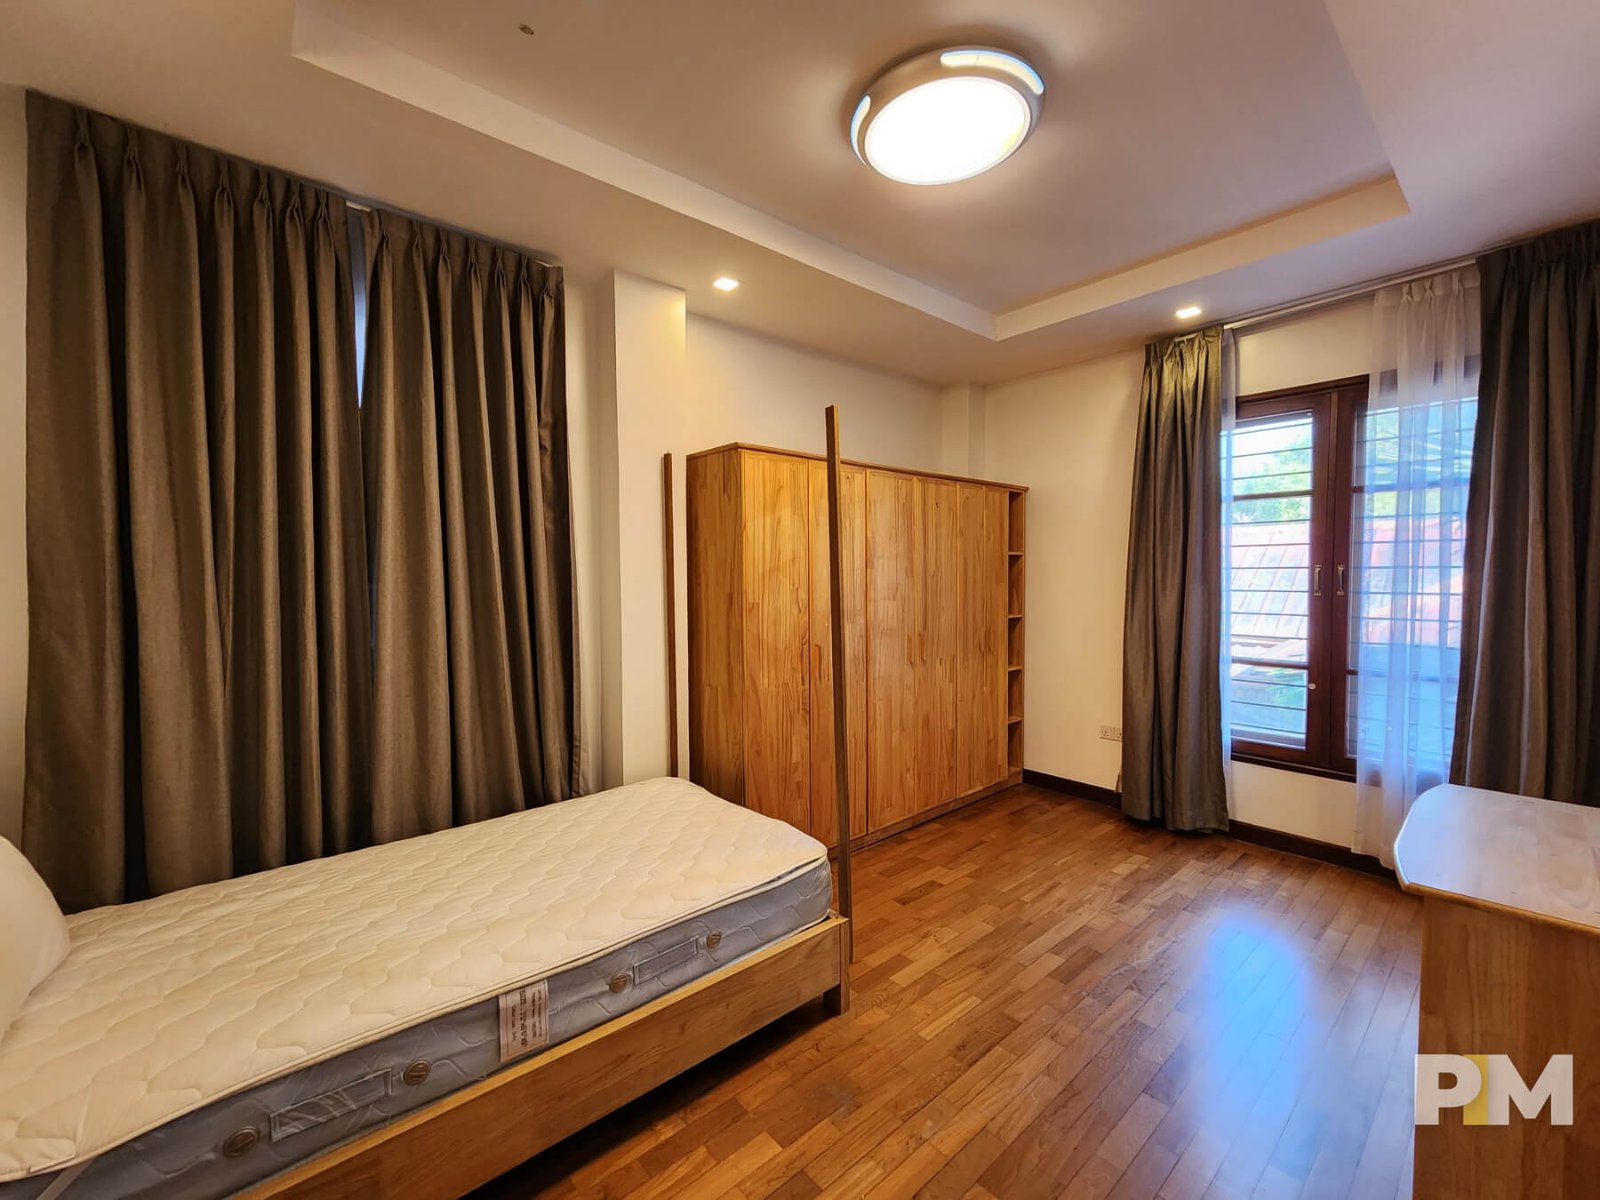 Bedroom view - Myanmar Real Estate (2)